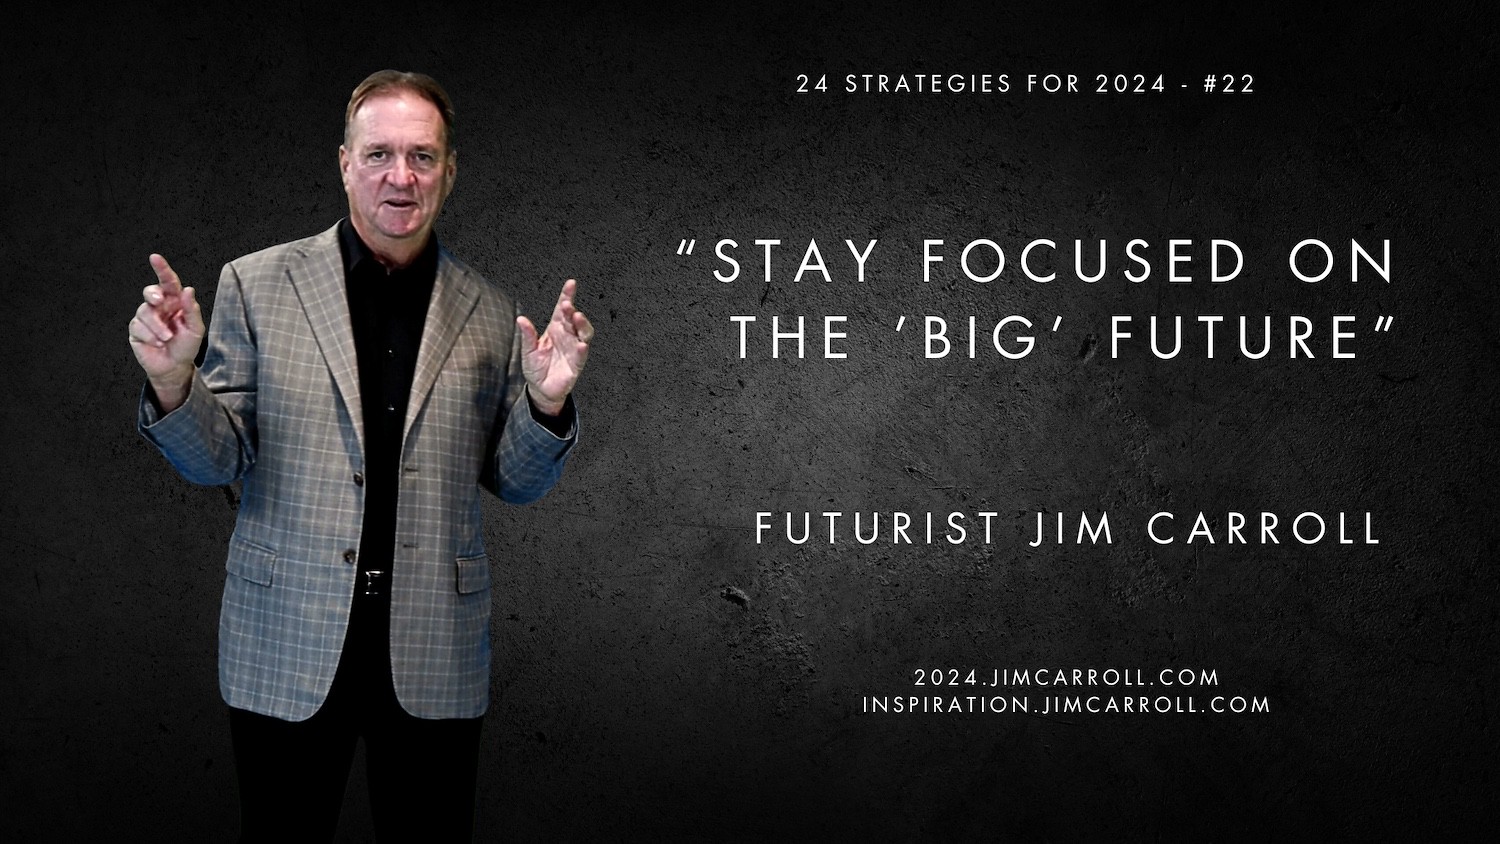 `“Stay focused on the ’BIG’ future” - Futurist Jim Carroll